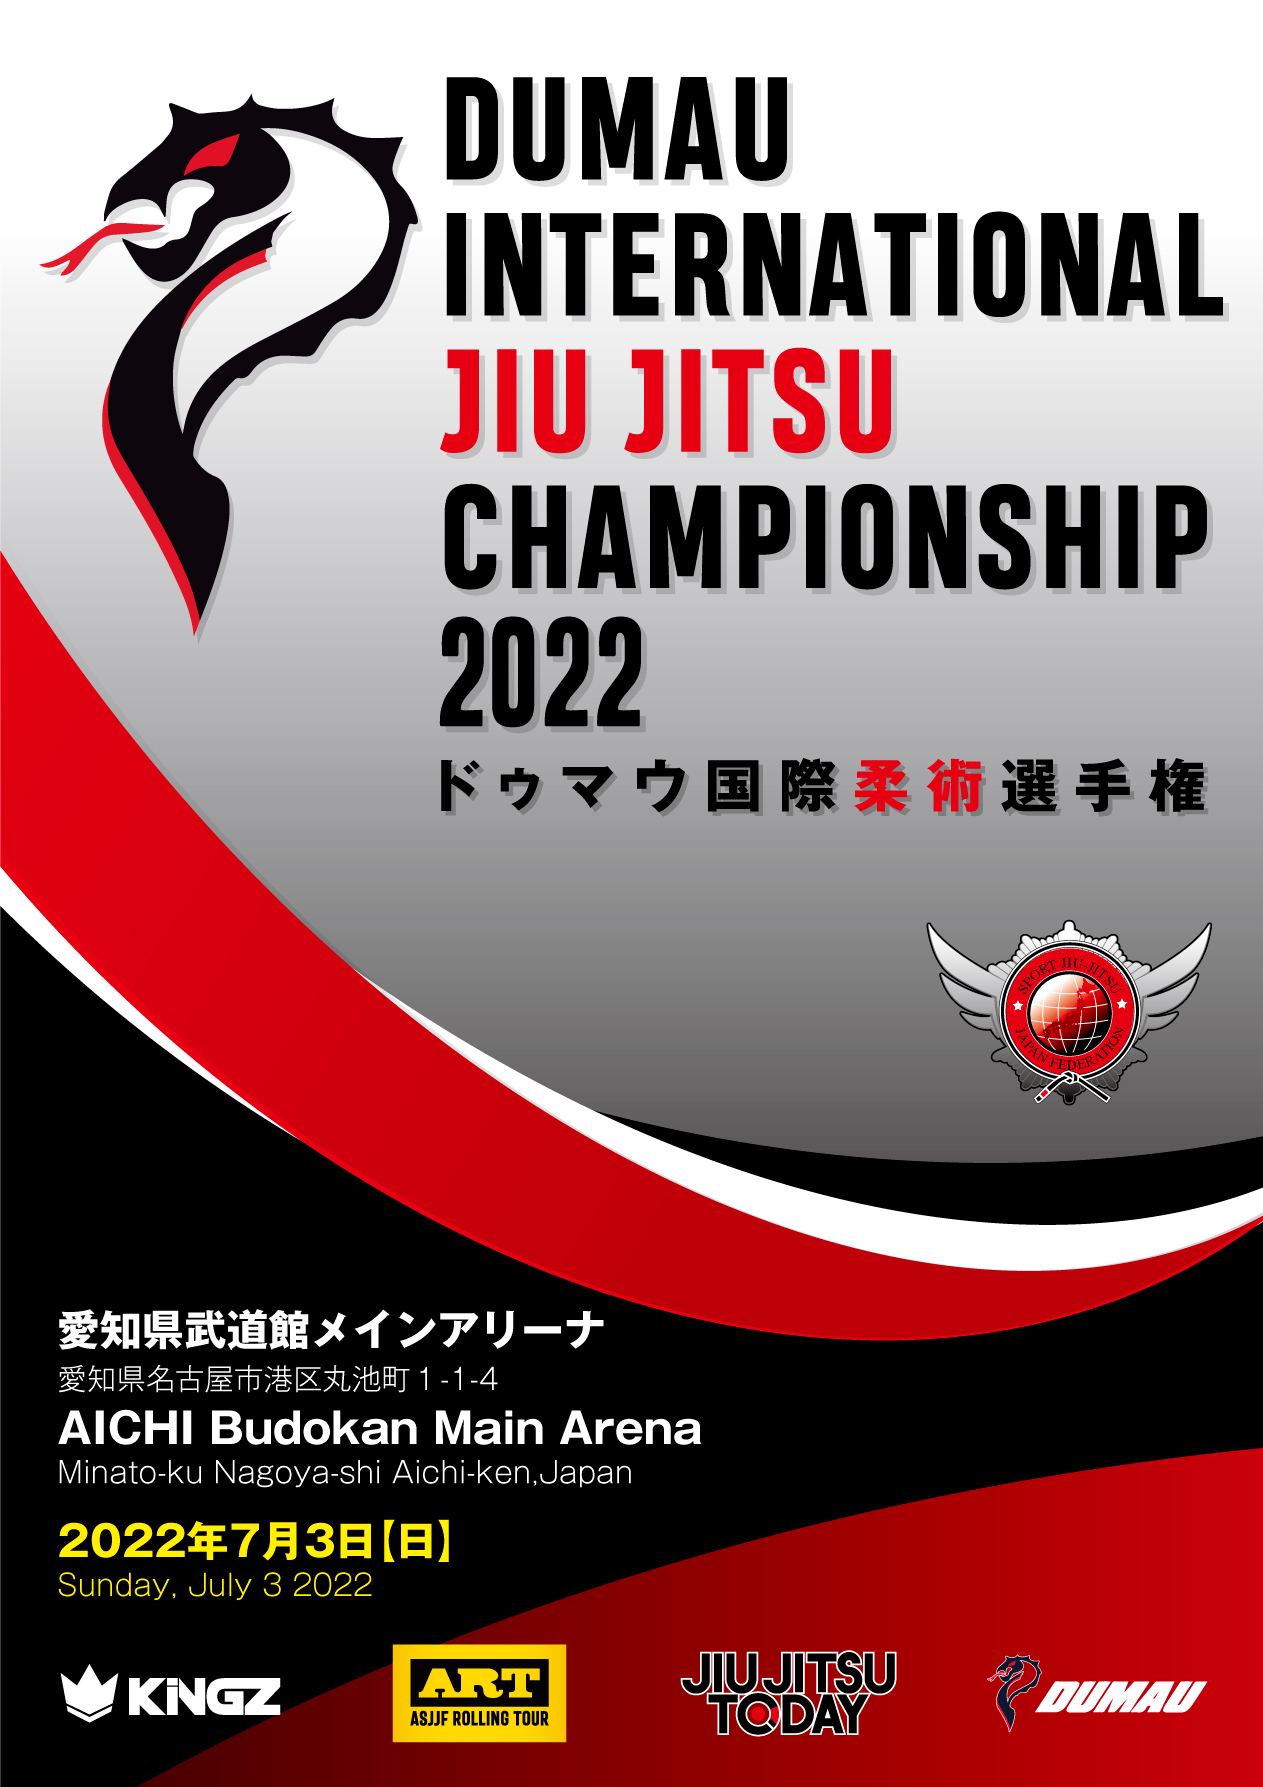 Dumau International Jiu Jitsu Championship 2022